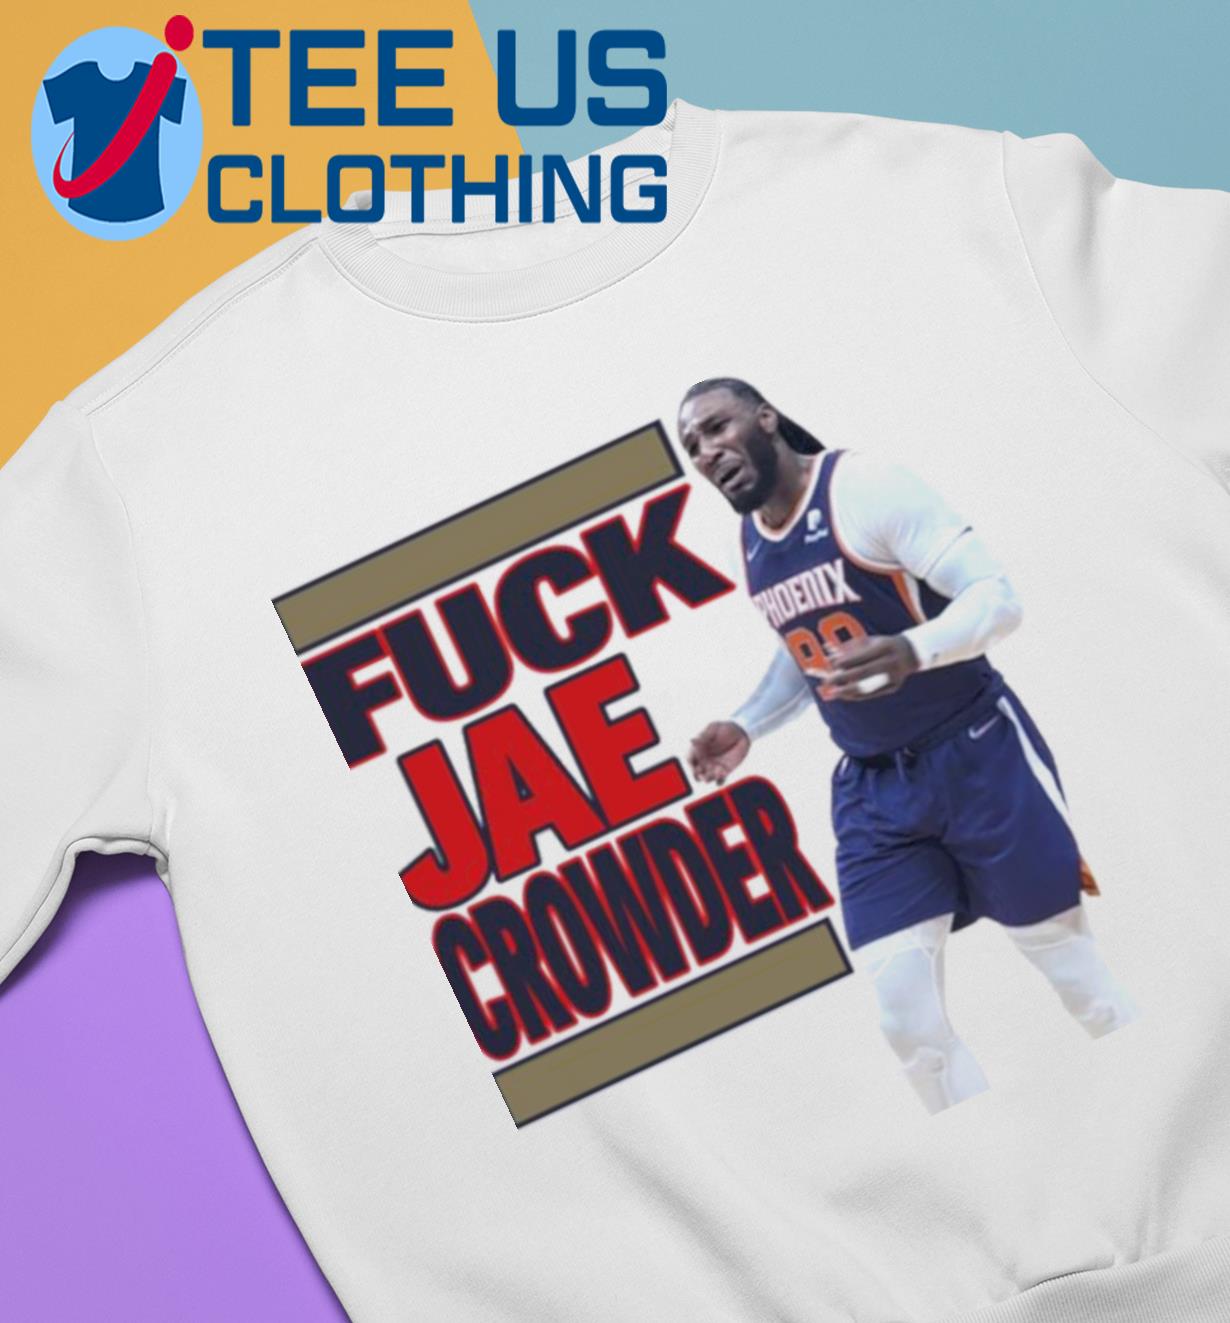 Fuck Jae Crowder Shirt D Book And Sweatshirt - Teeholly